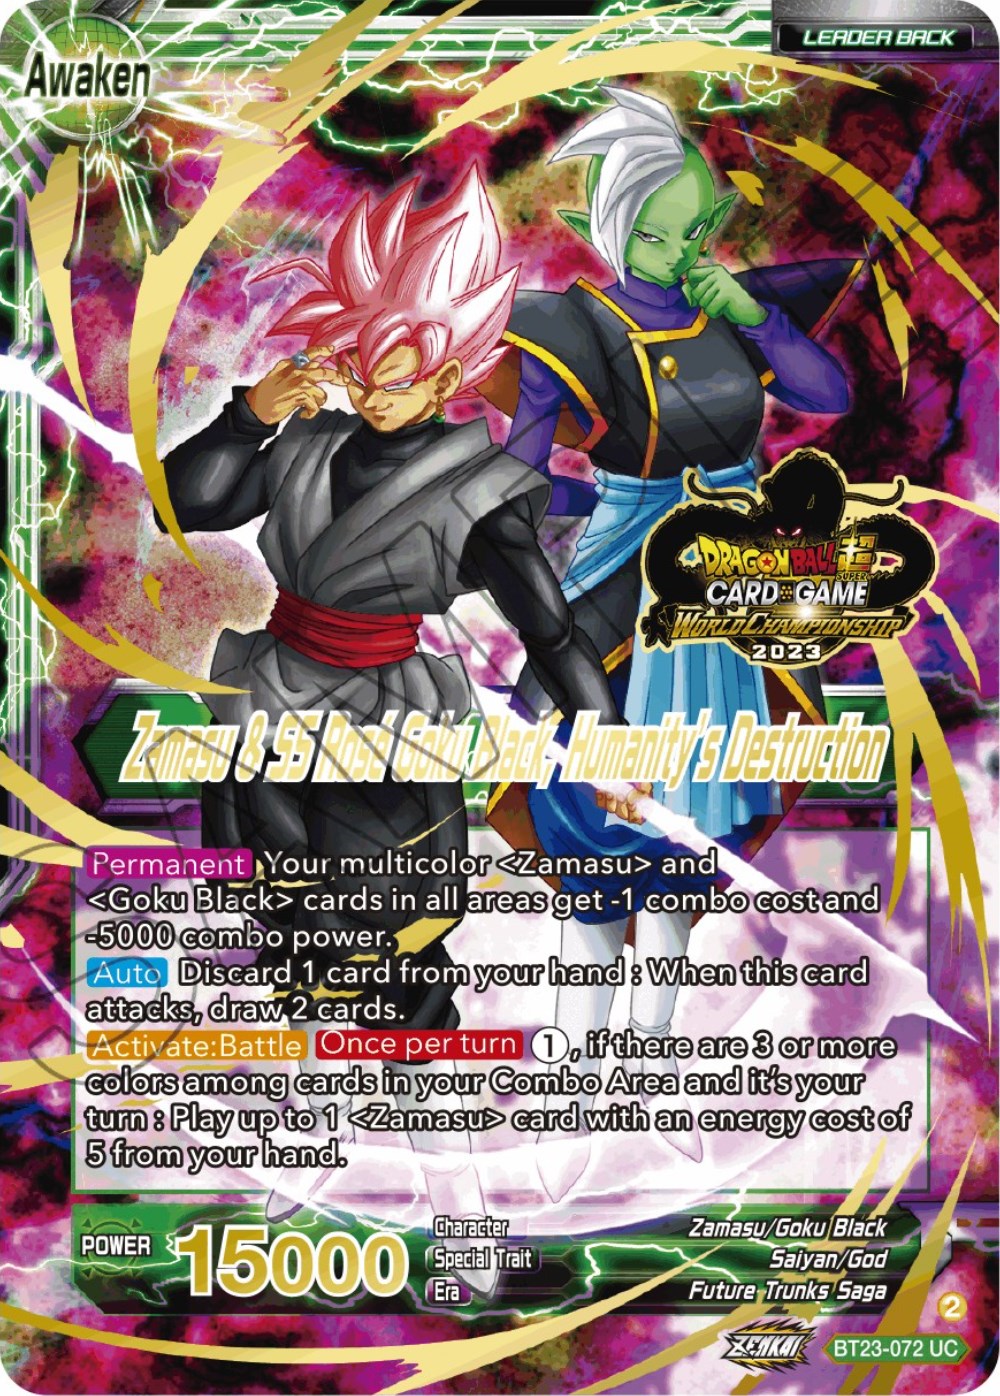 Zamasu & Goku Black // Zamasu & SS Rose Goku Black, Humanity's Destruction (2023 Worlds ZENKAI 06 Leader Set) (BT23-072) [Tournament Promotion Cards] | Sanctuary Gaming